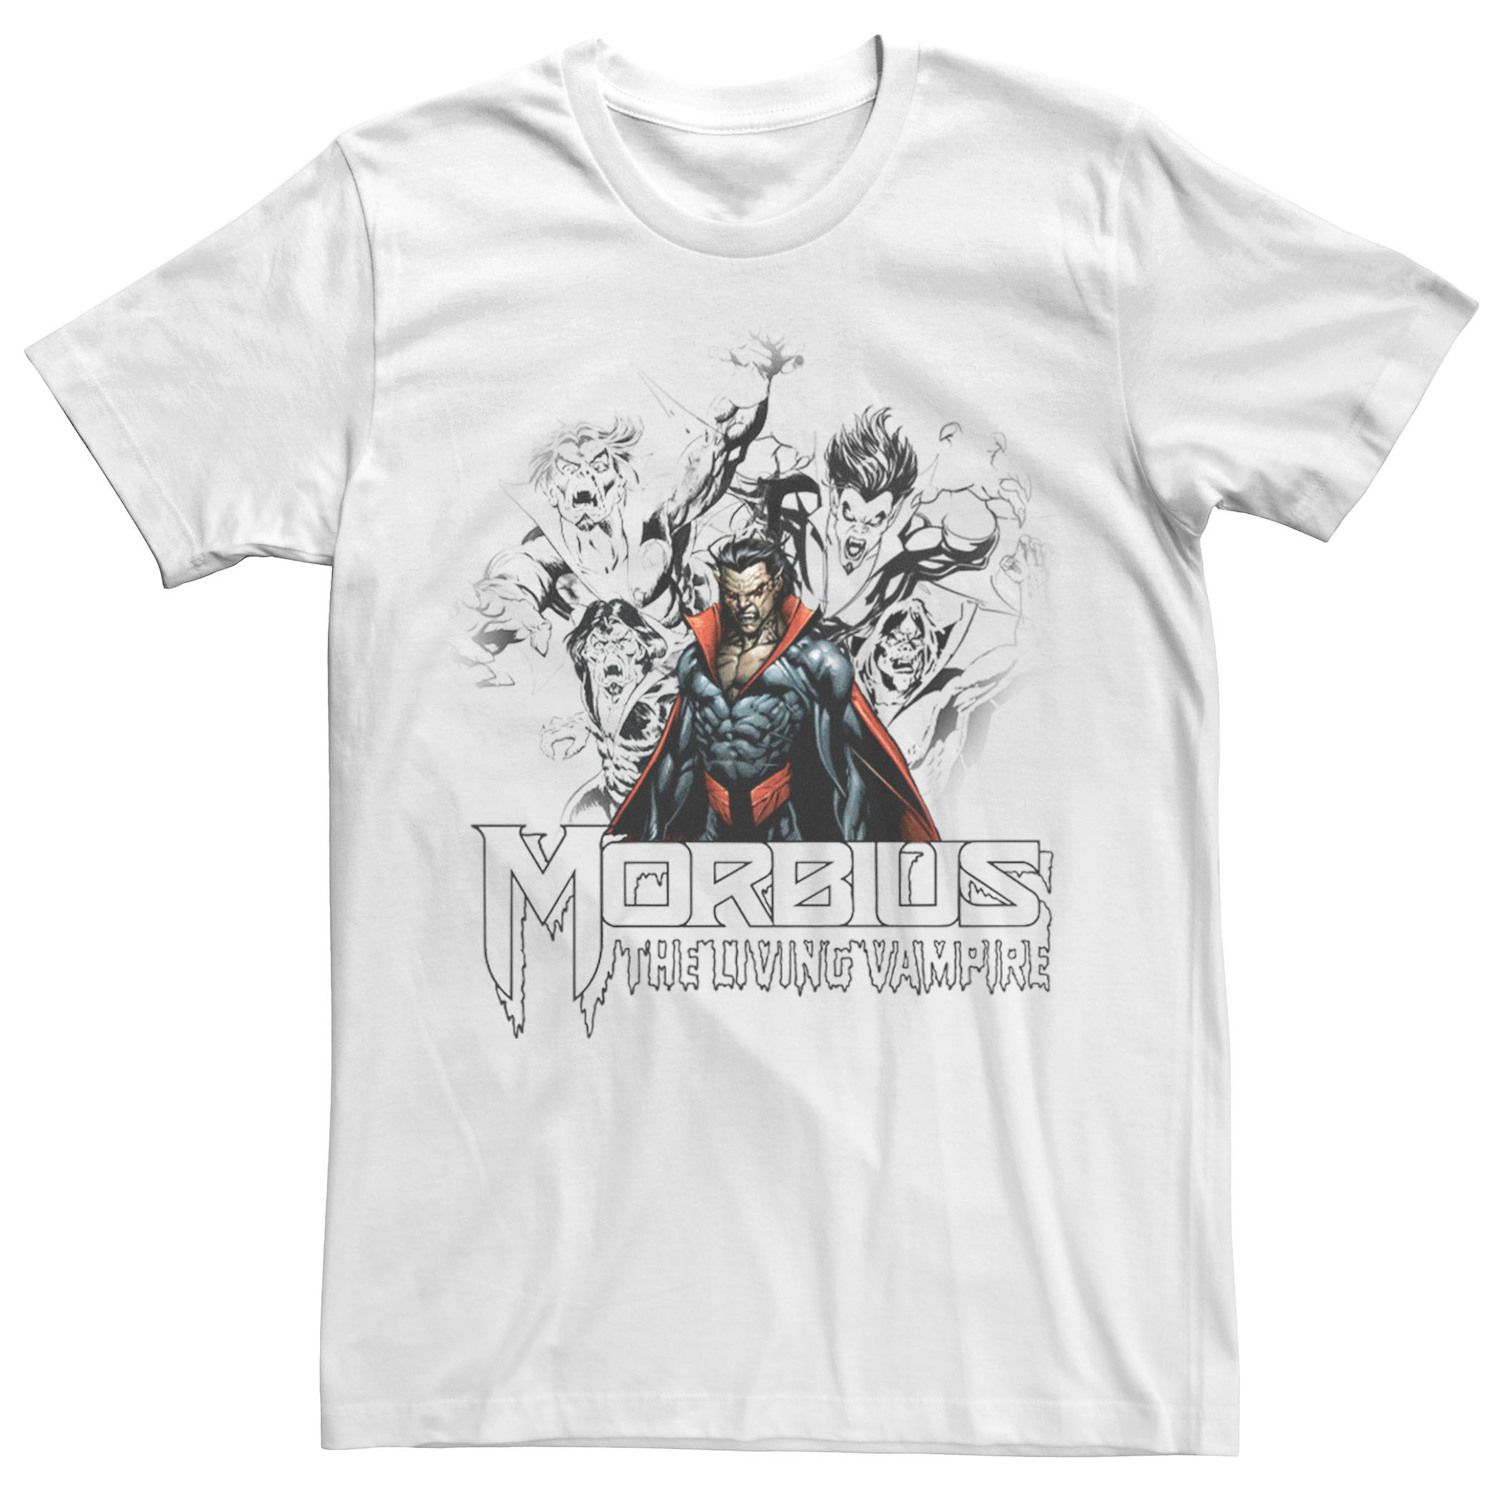 Мужская футболка с рисунками Morbius The Living Vampire Marvel